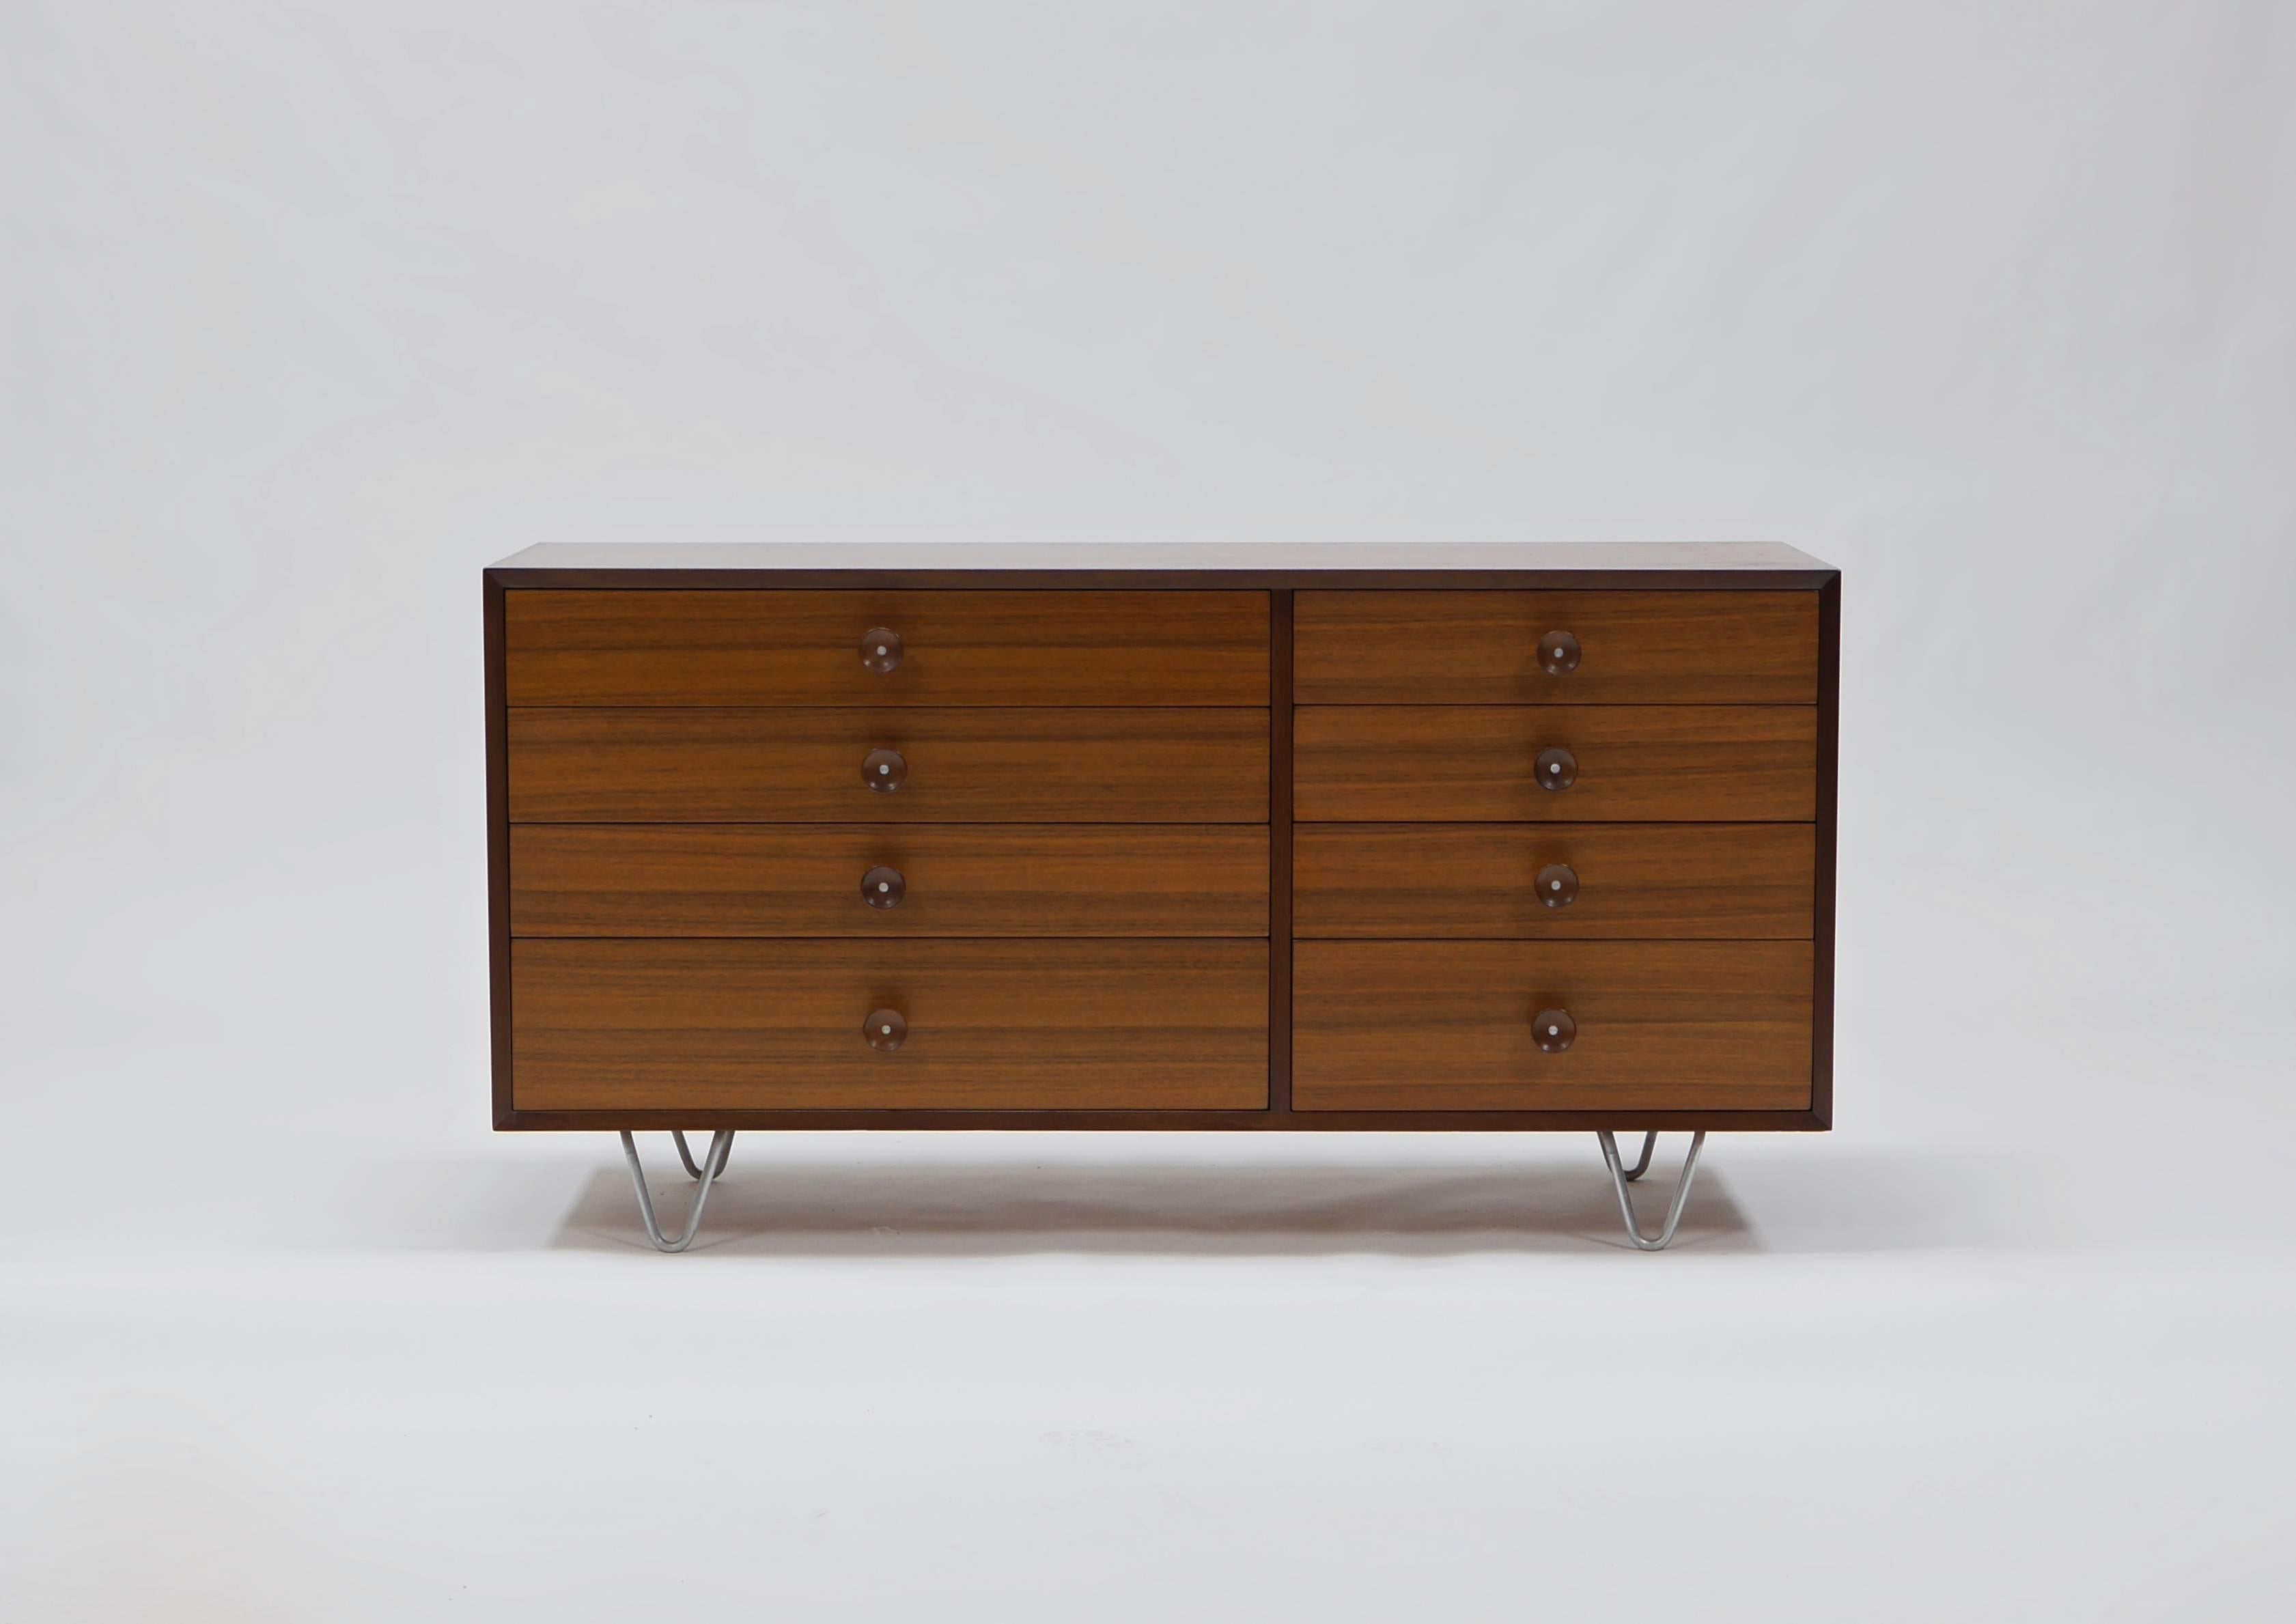 Eight-drawer dresser by George Nelson for Herman Miller, having 